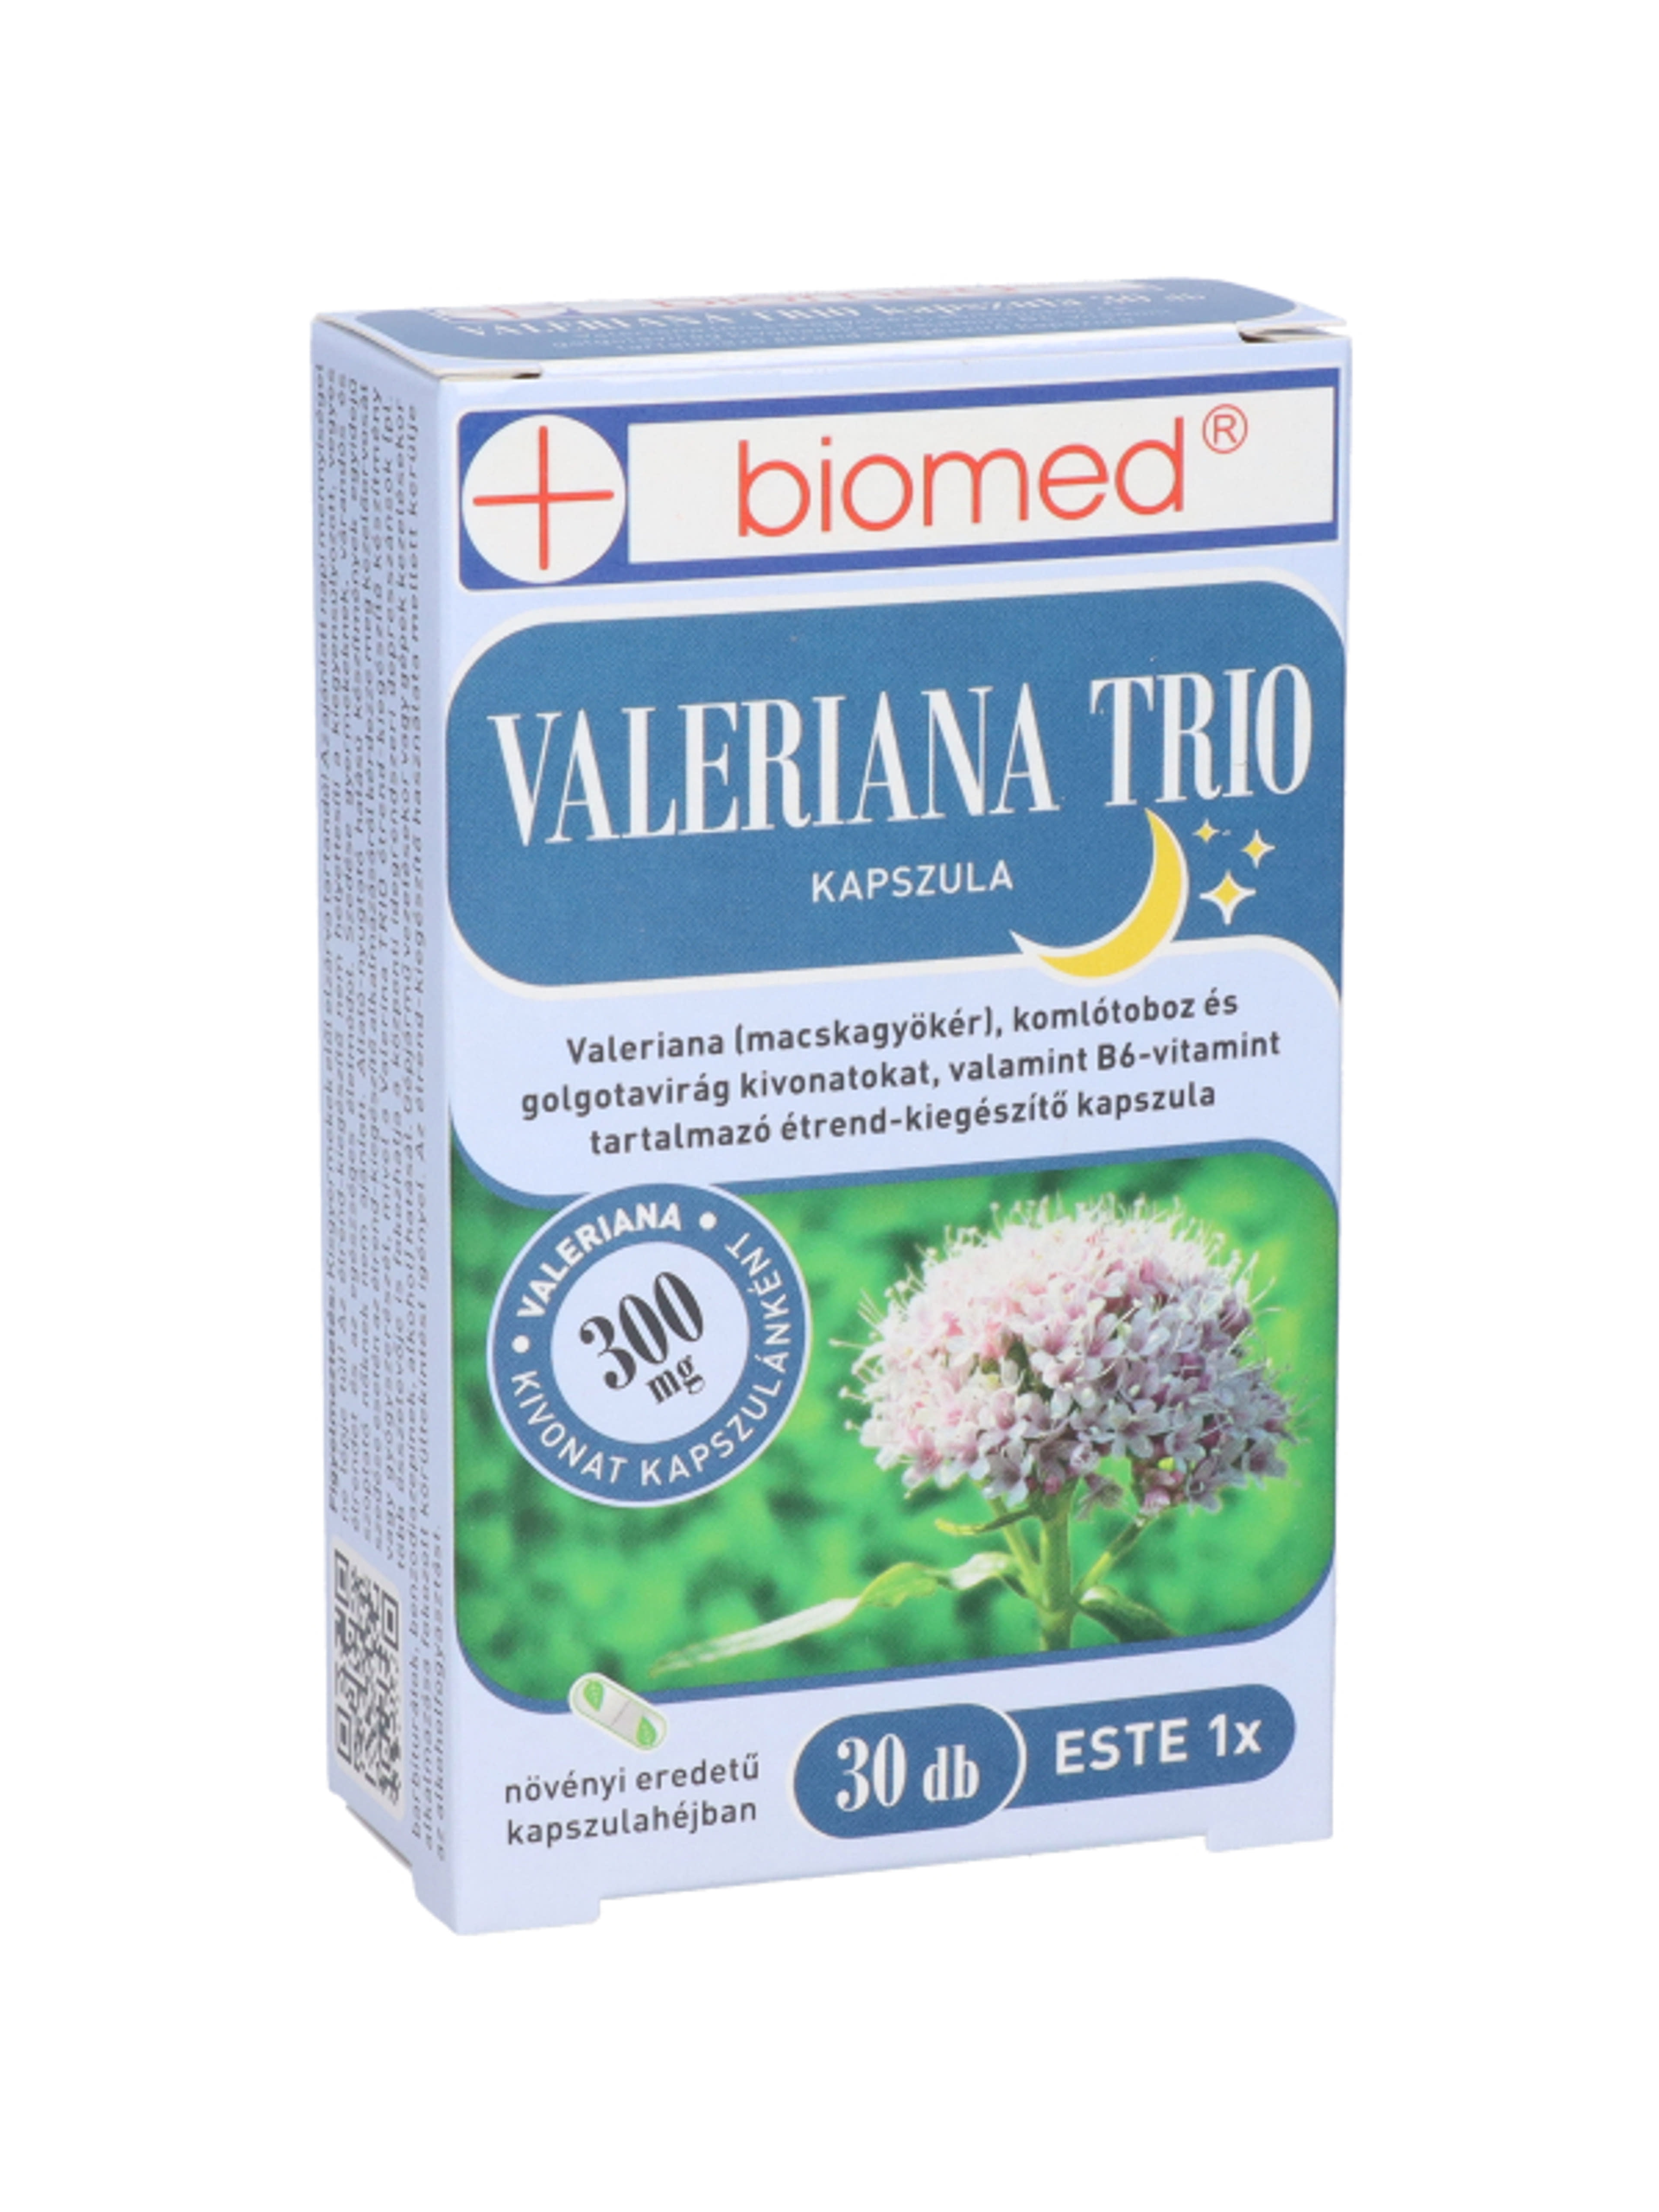 Biomed valeriana trio kapszula - 30 db-2